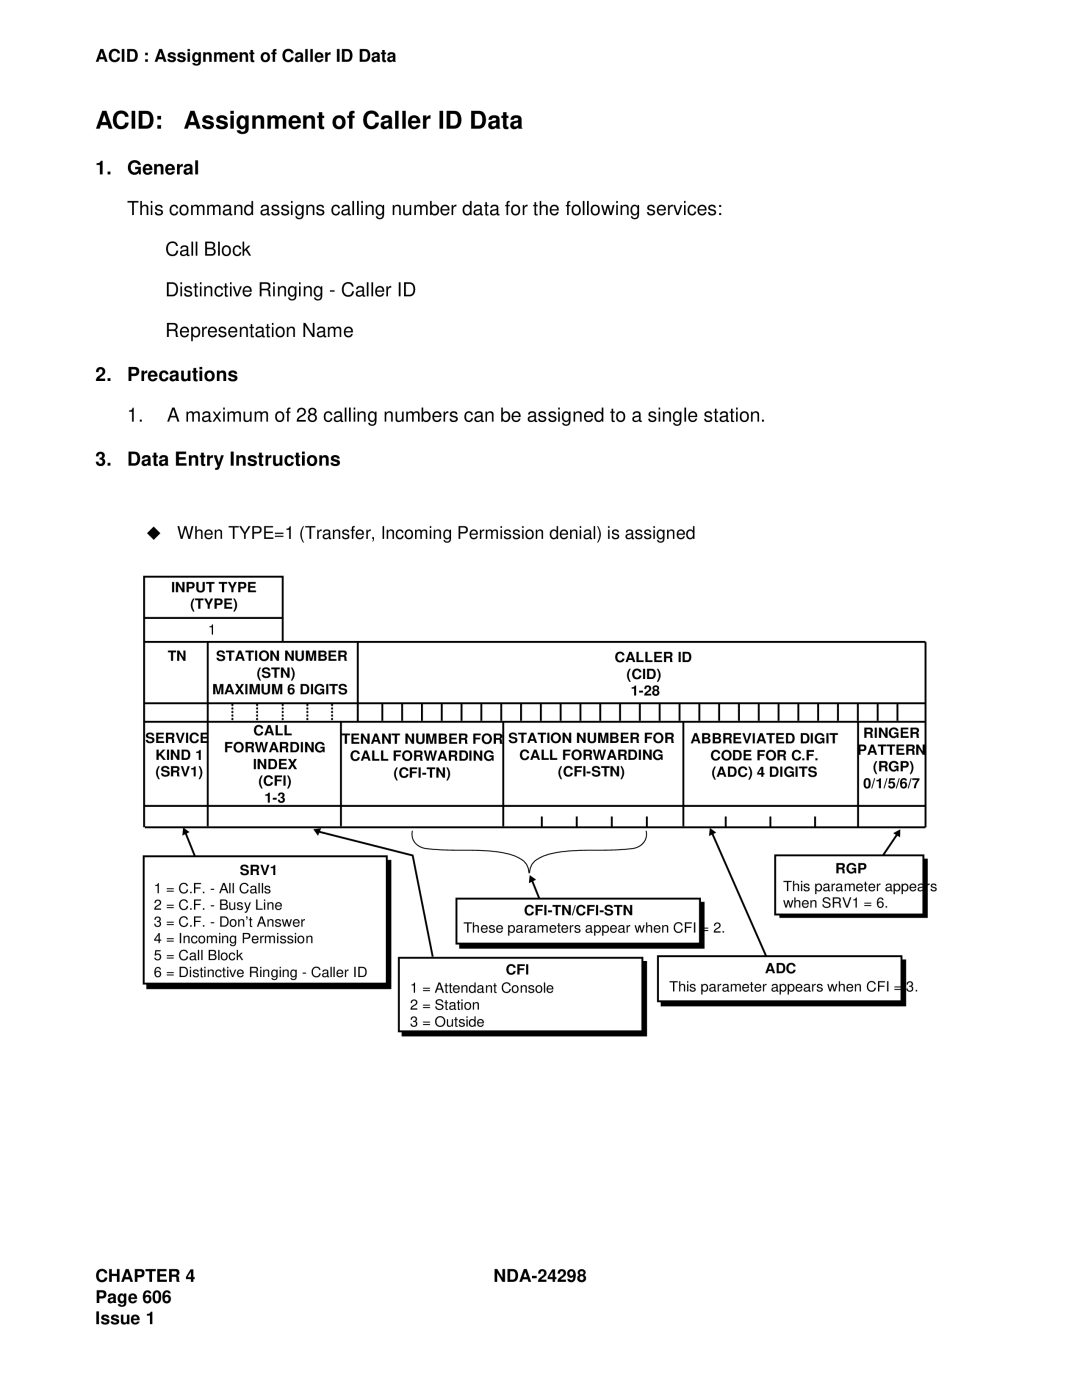 NEC NDA-24298 manual Acid Assignment of Caller ID Data 